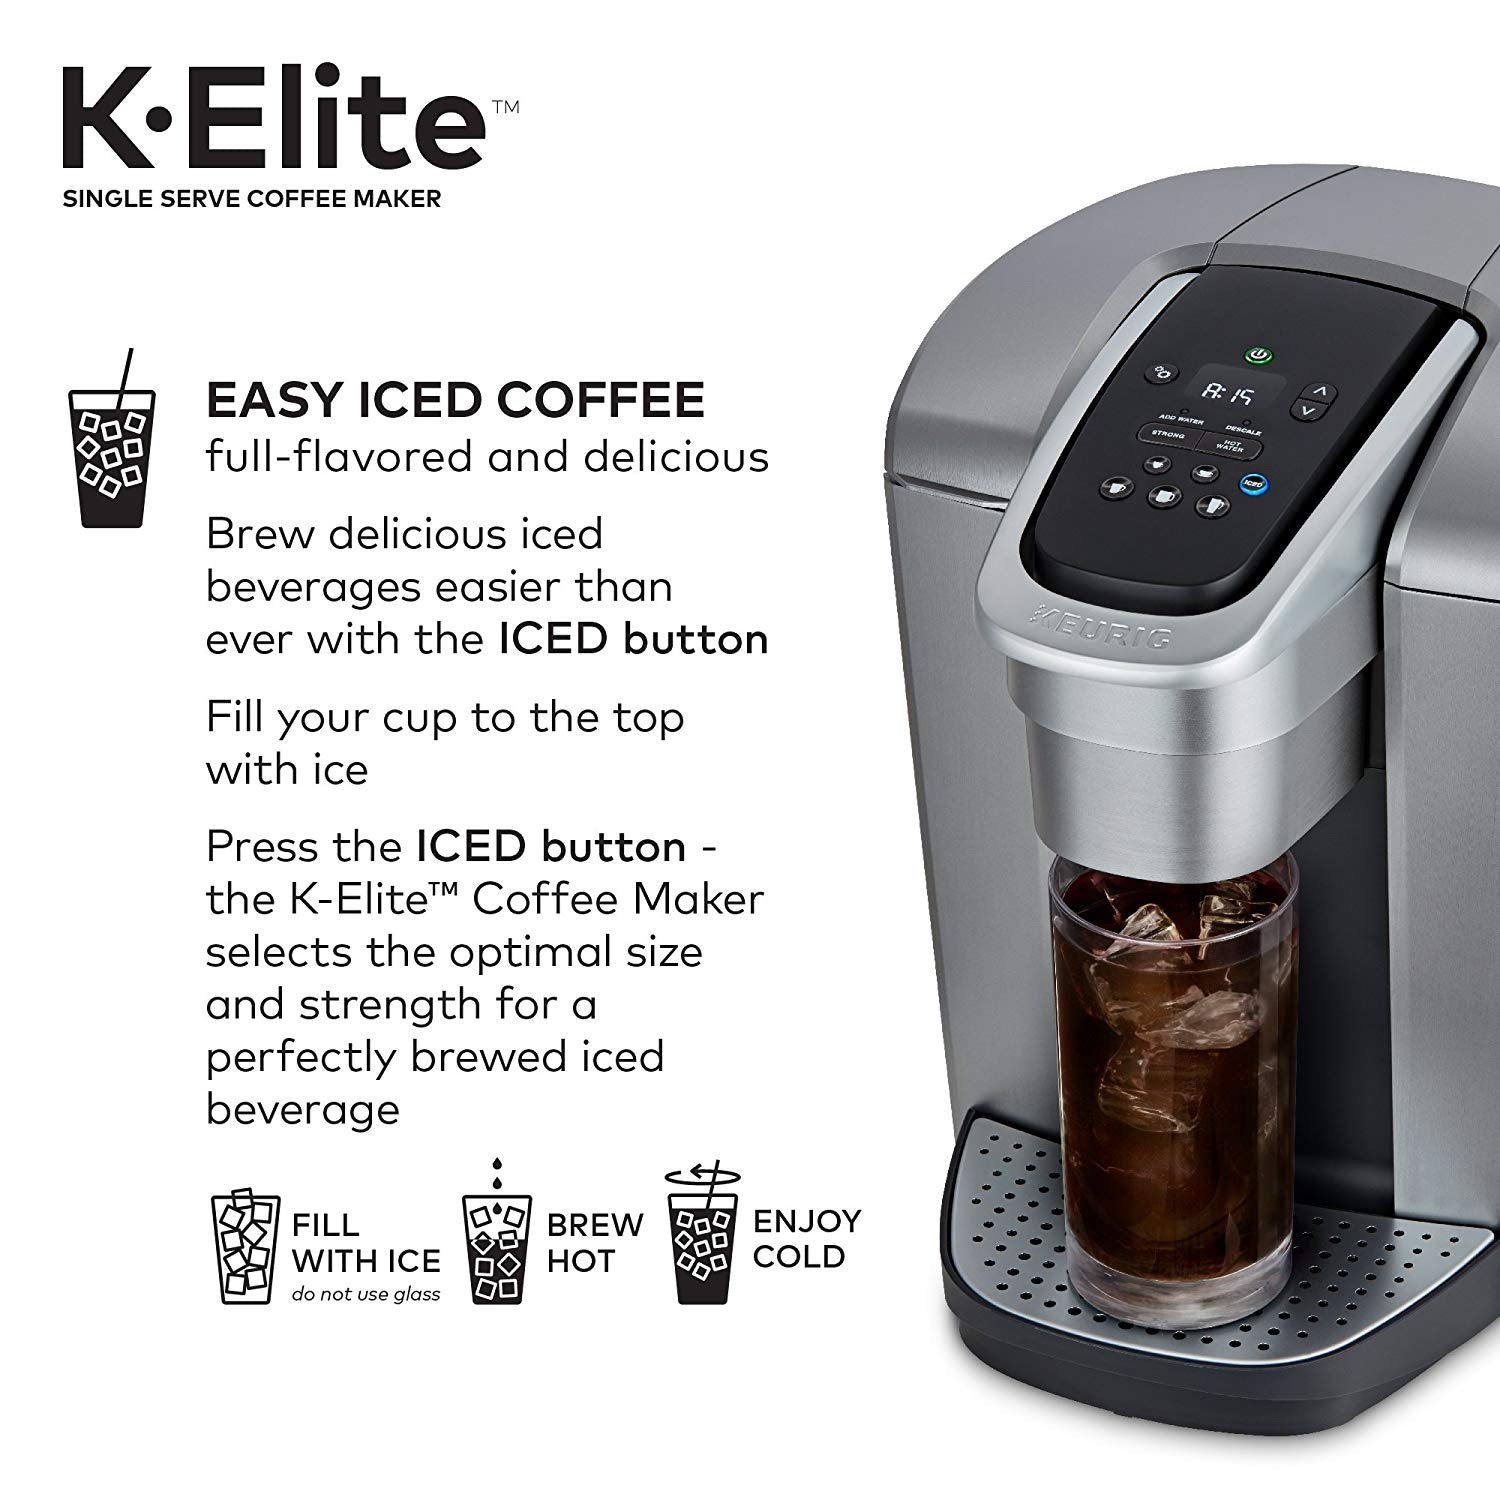 Keurig K-Elite Coffee Maker, Single Serve K-Cup Pod Coffee Brewer, Wit –  Green Global Office Products